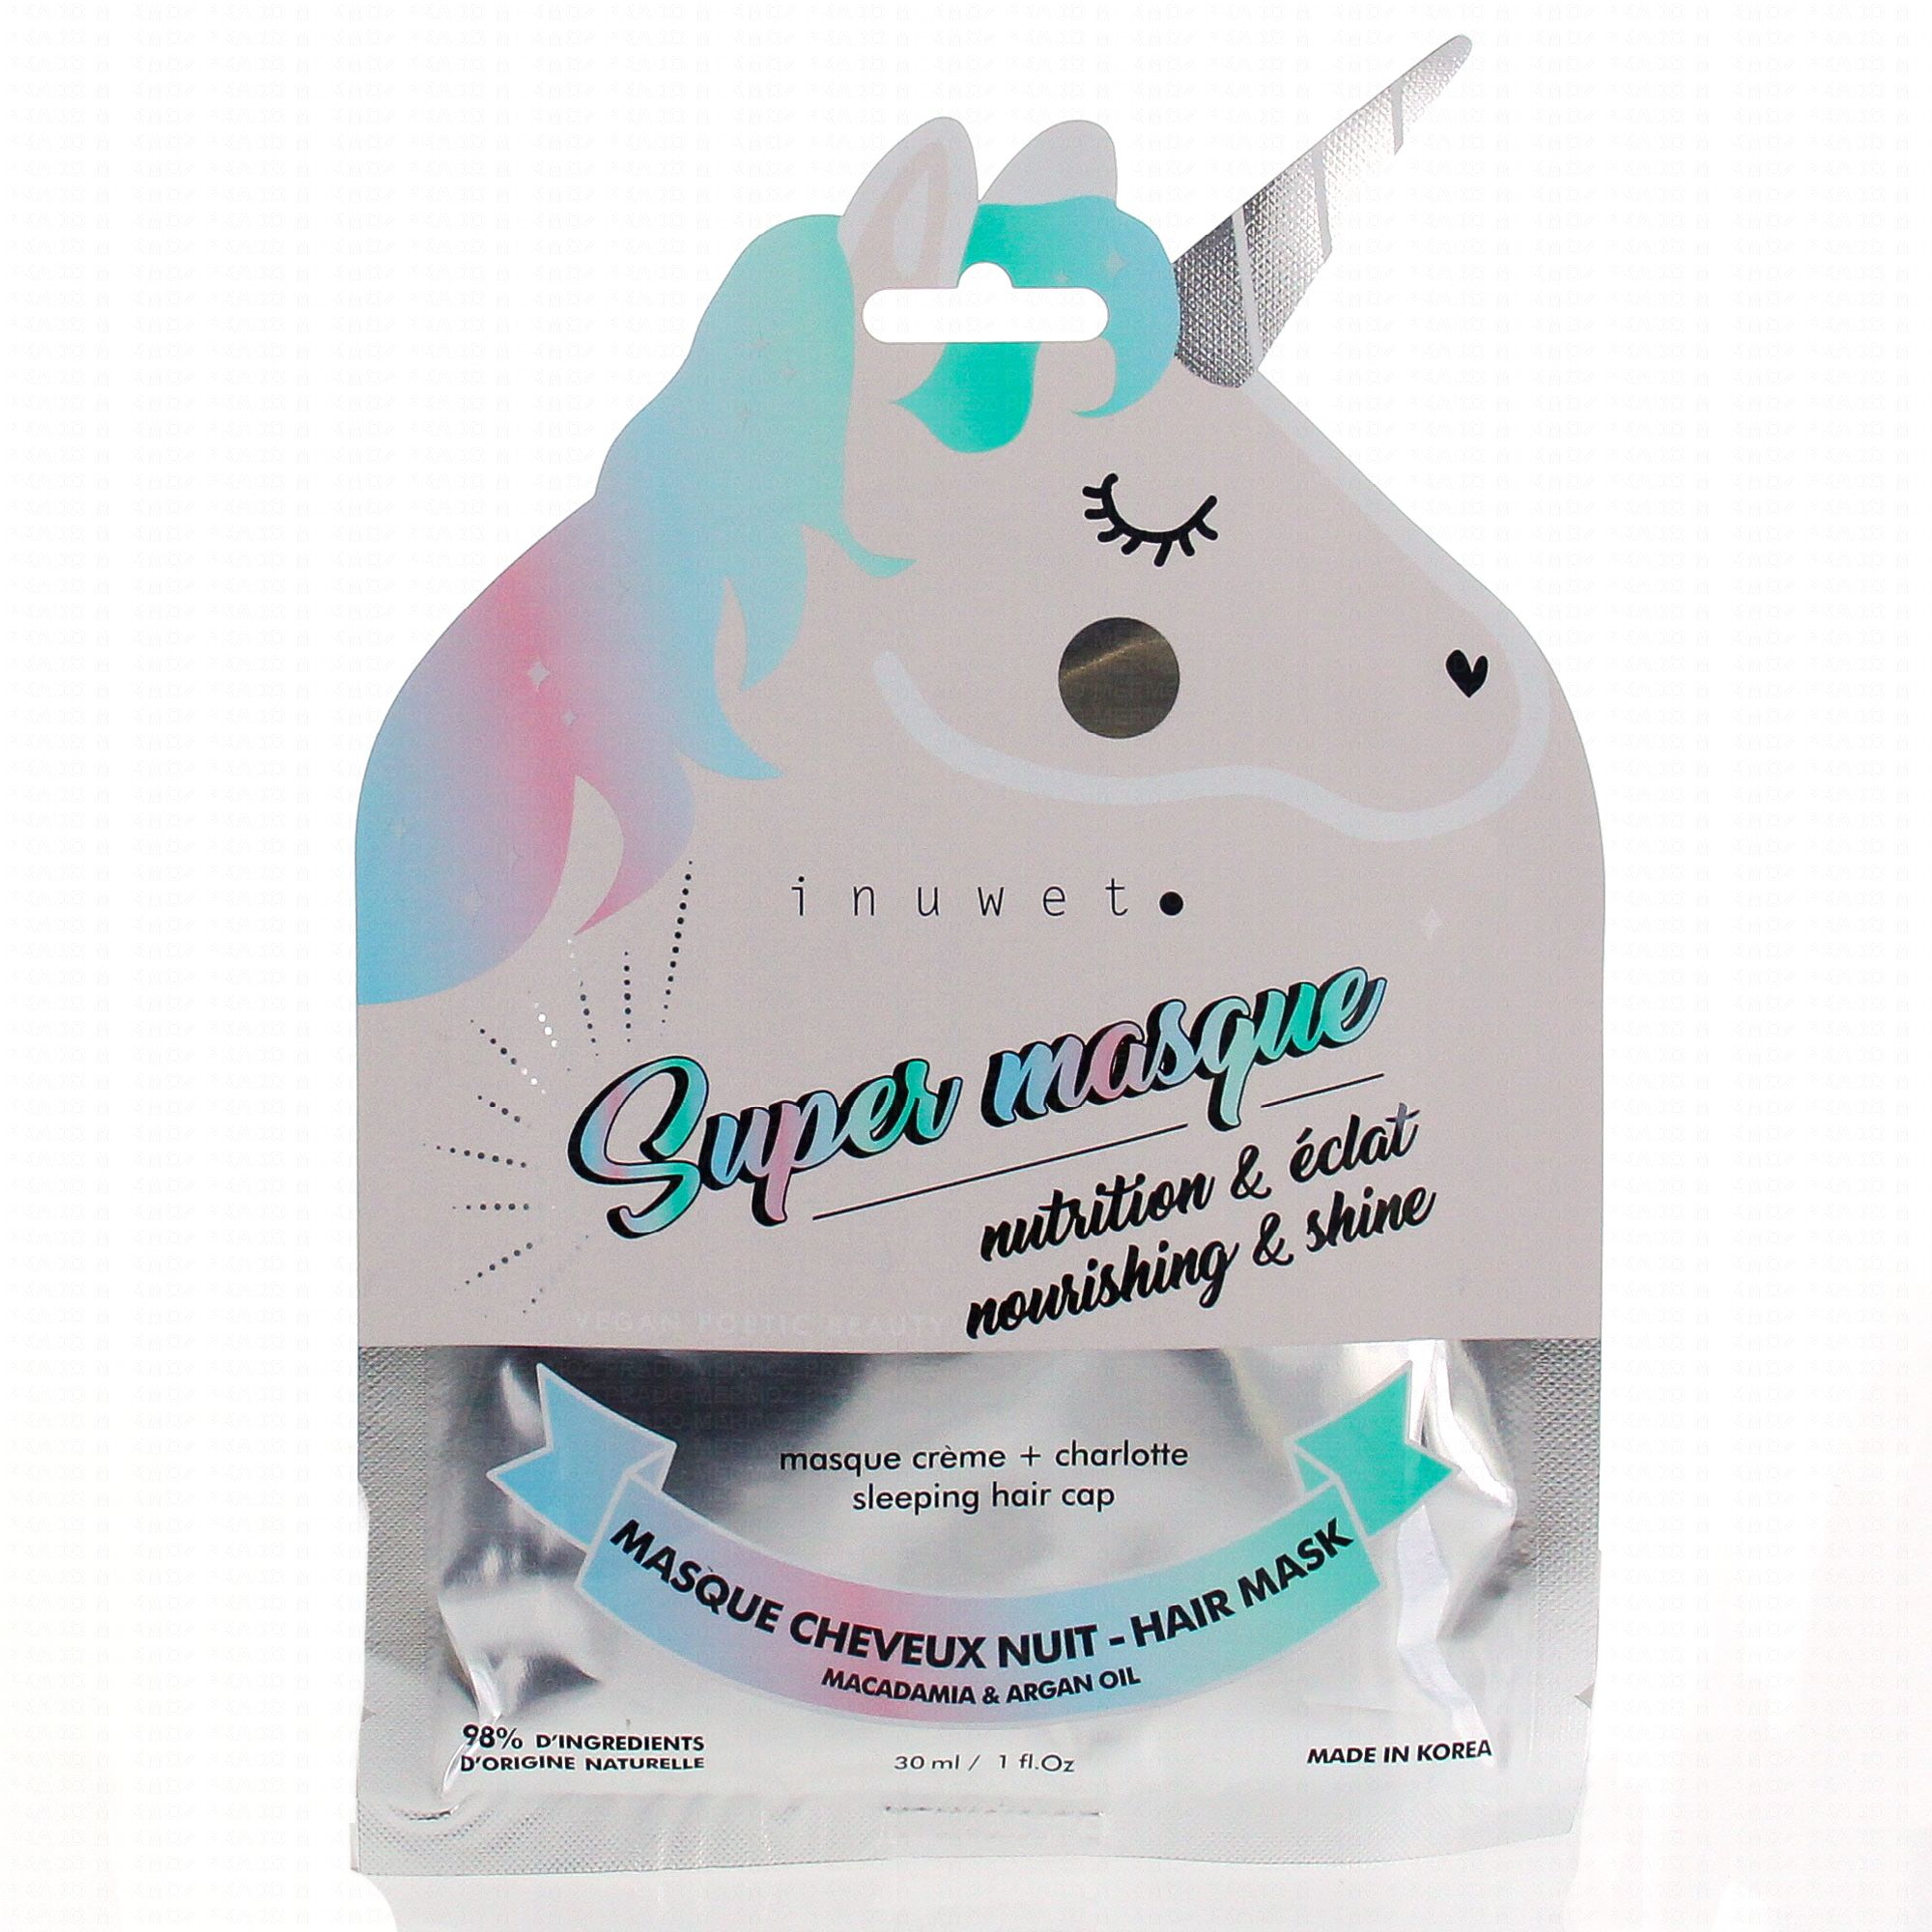 INUWET Super masque Masque crème cheveux nuit 30ml + charlotte -  Parapharmacie Prado Mermoz